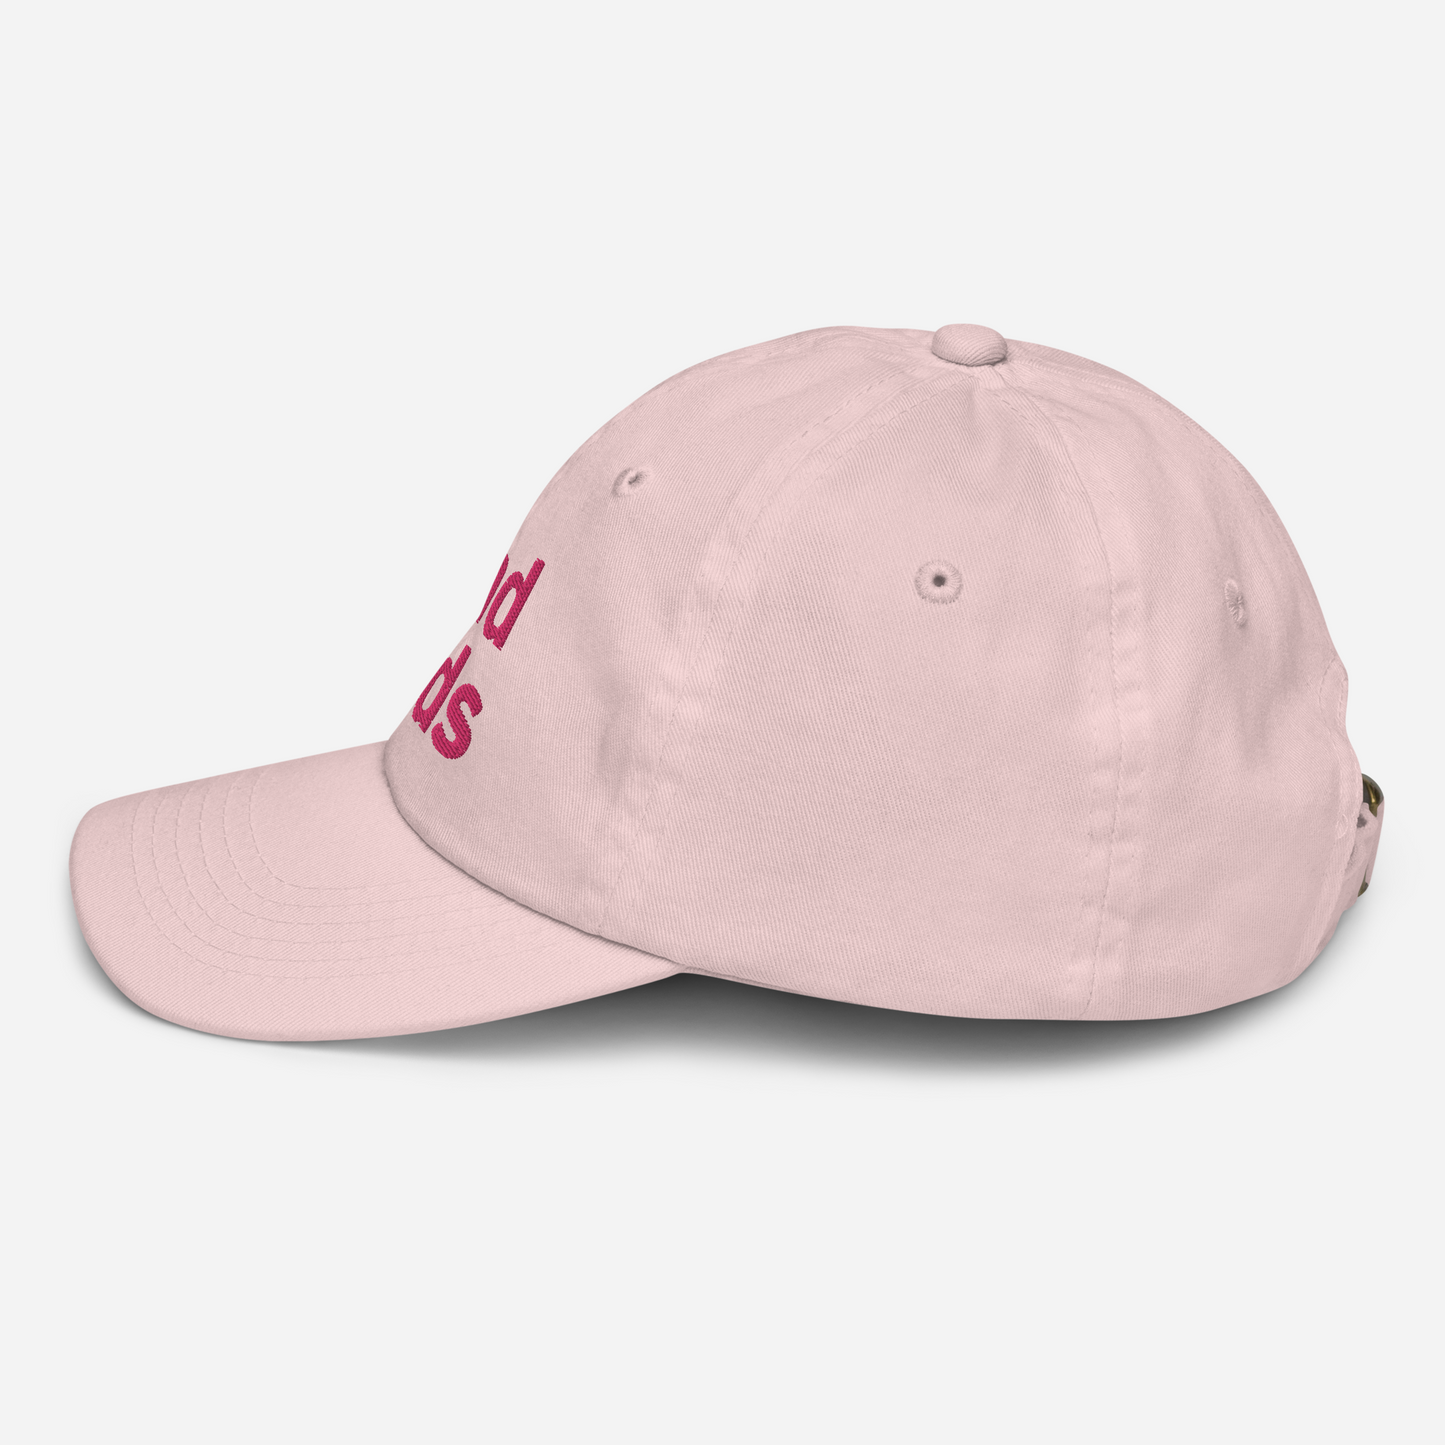 'Grand Rapids' Youth Baseball Cap (Hypermarket Parody) | Pink Embroidery